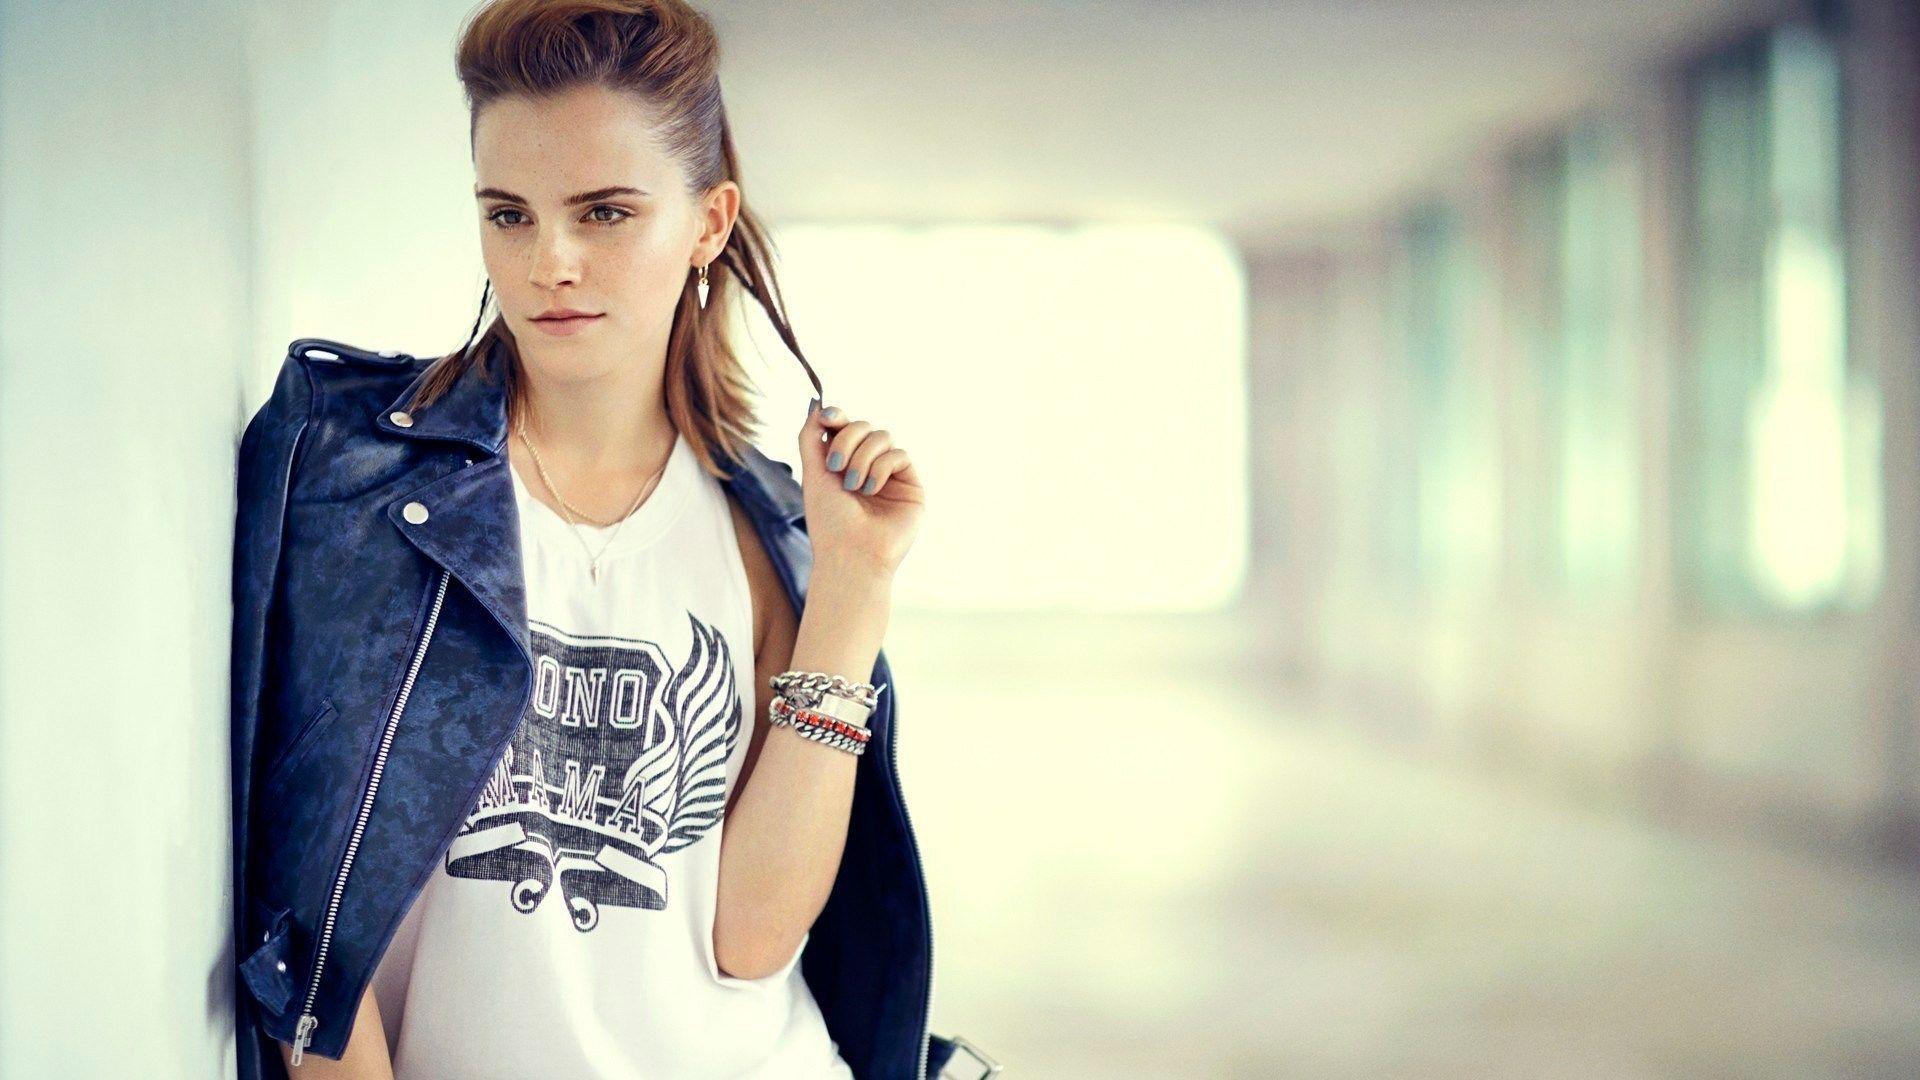 Emma Watson Wallpaper HD 2015 fashion. Wallpaper, Background